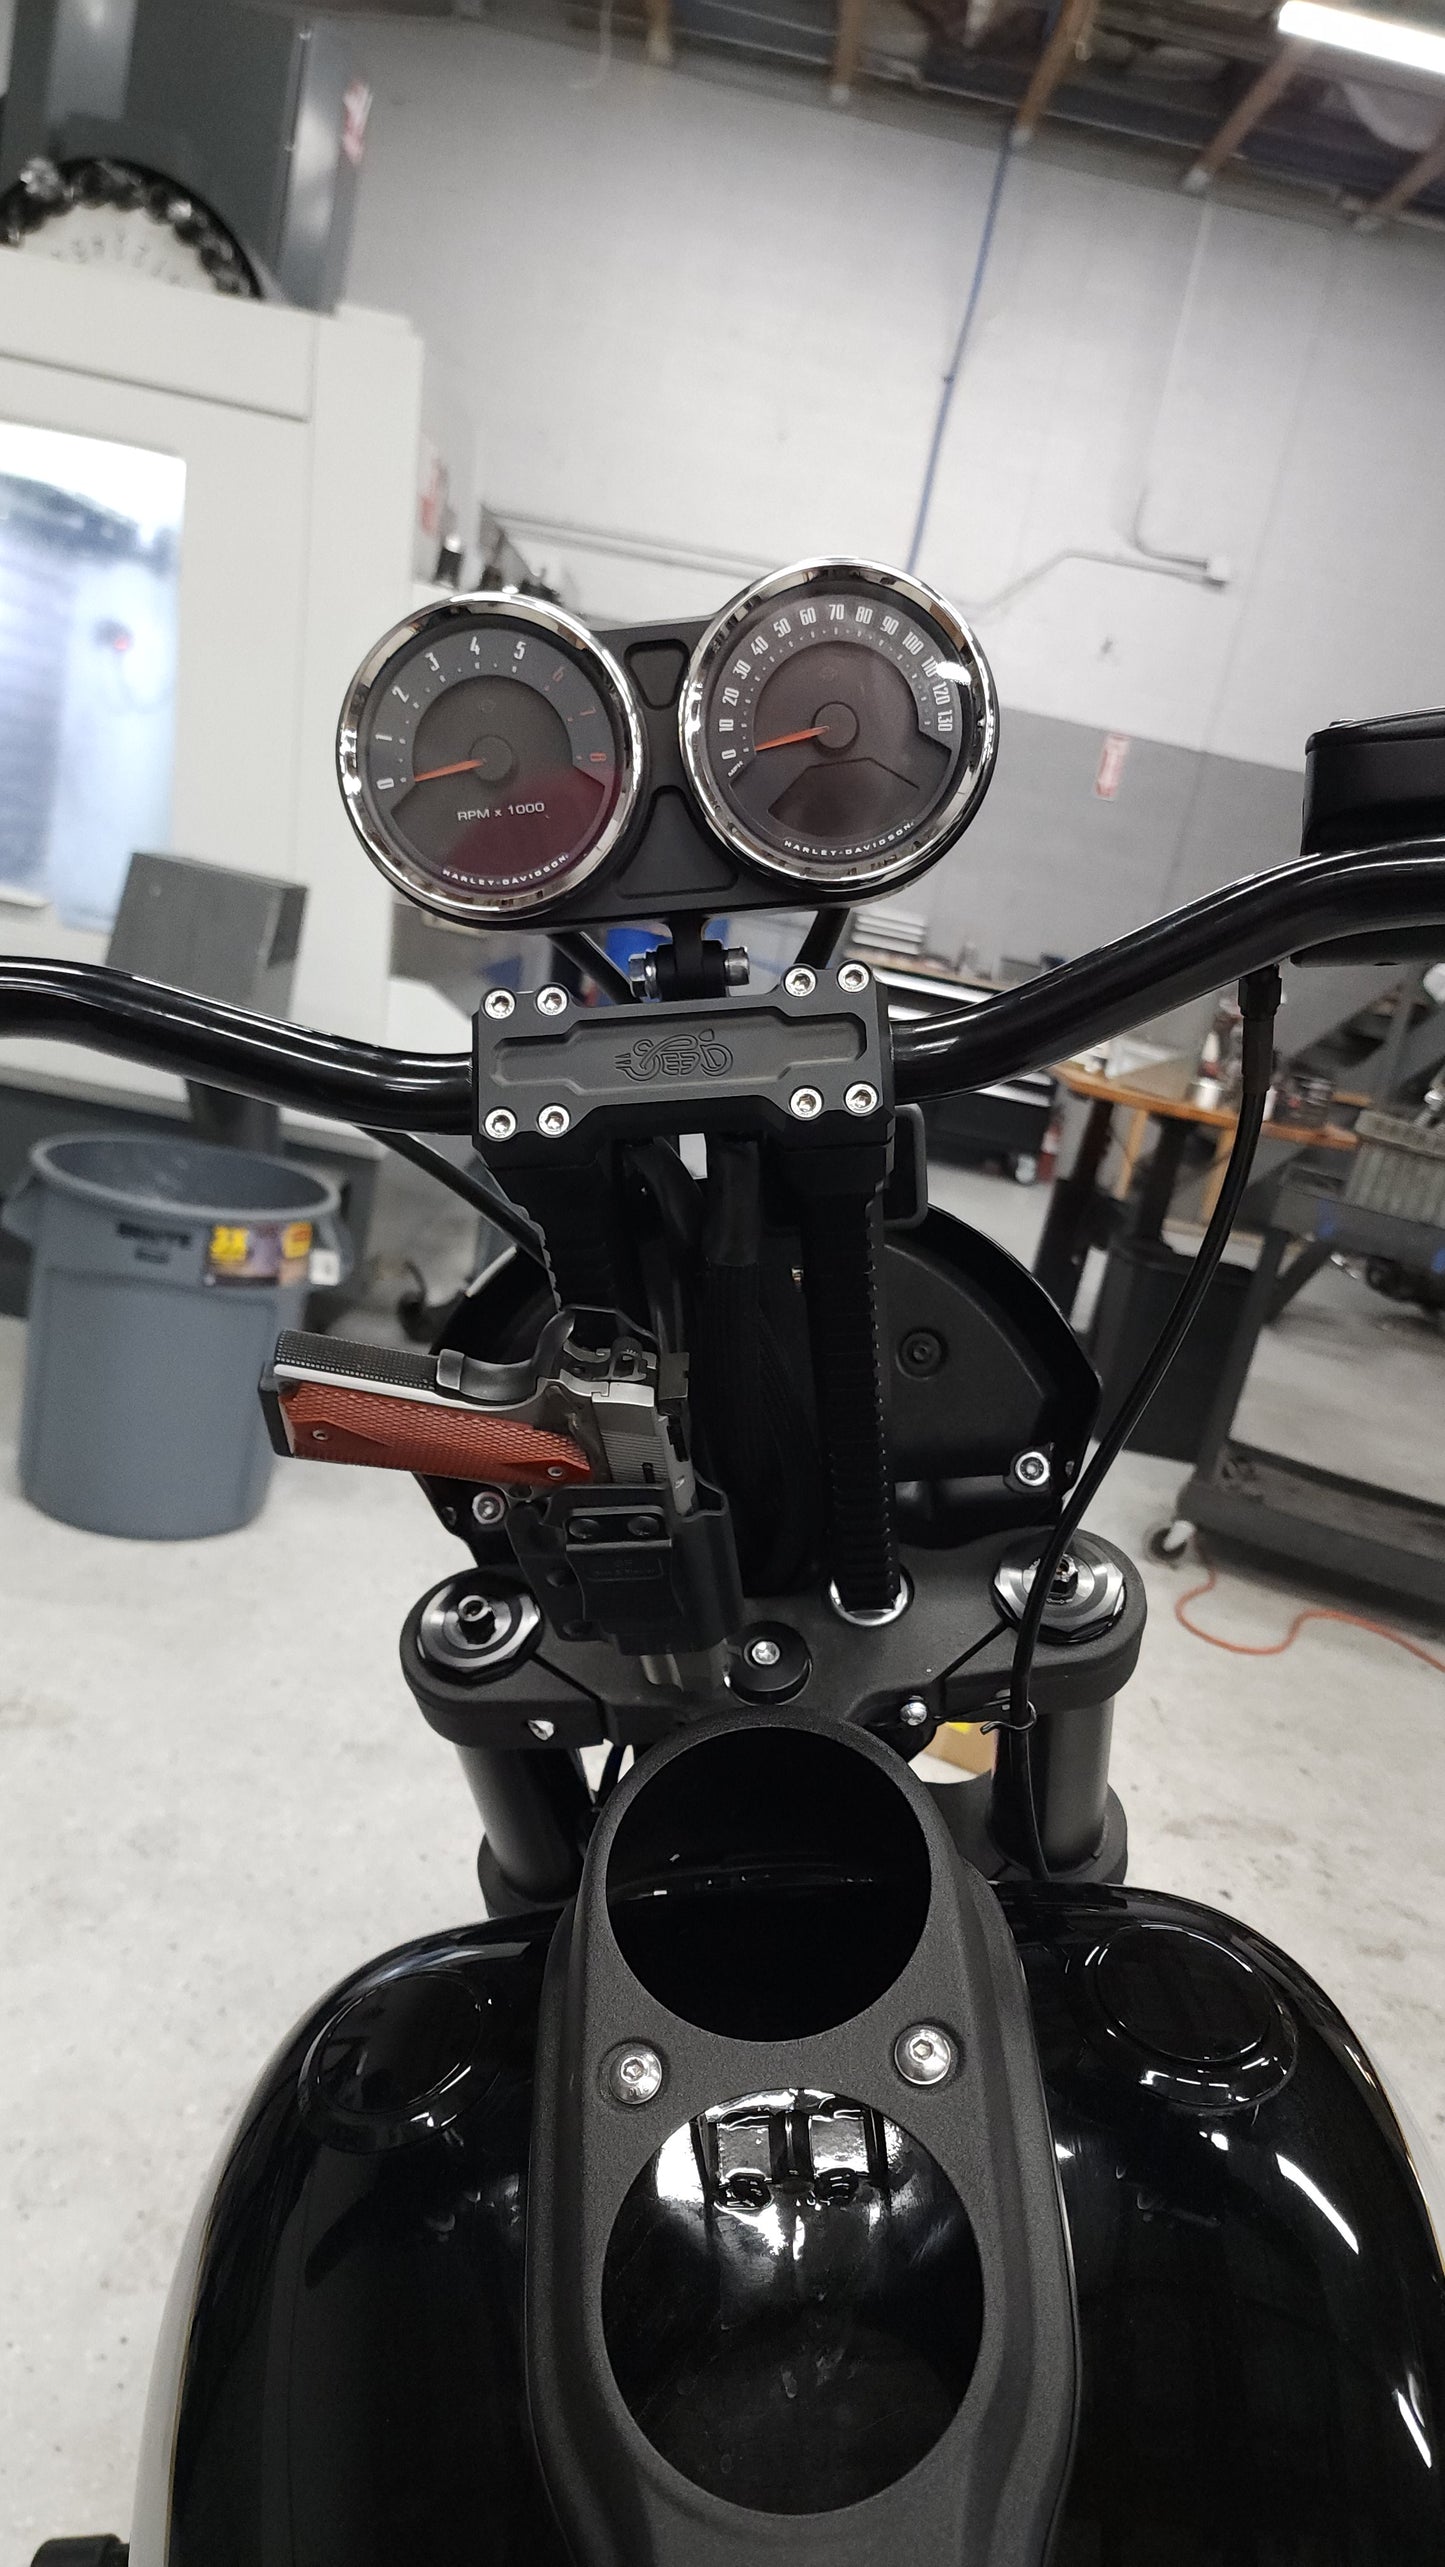 Harley Double Gauge Pic Rail Riser gauge pod kit